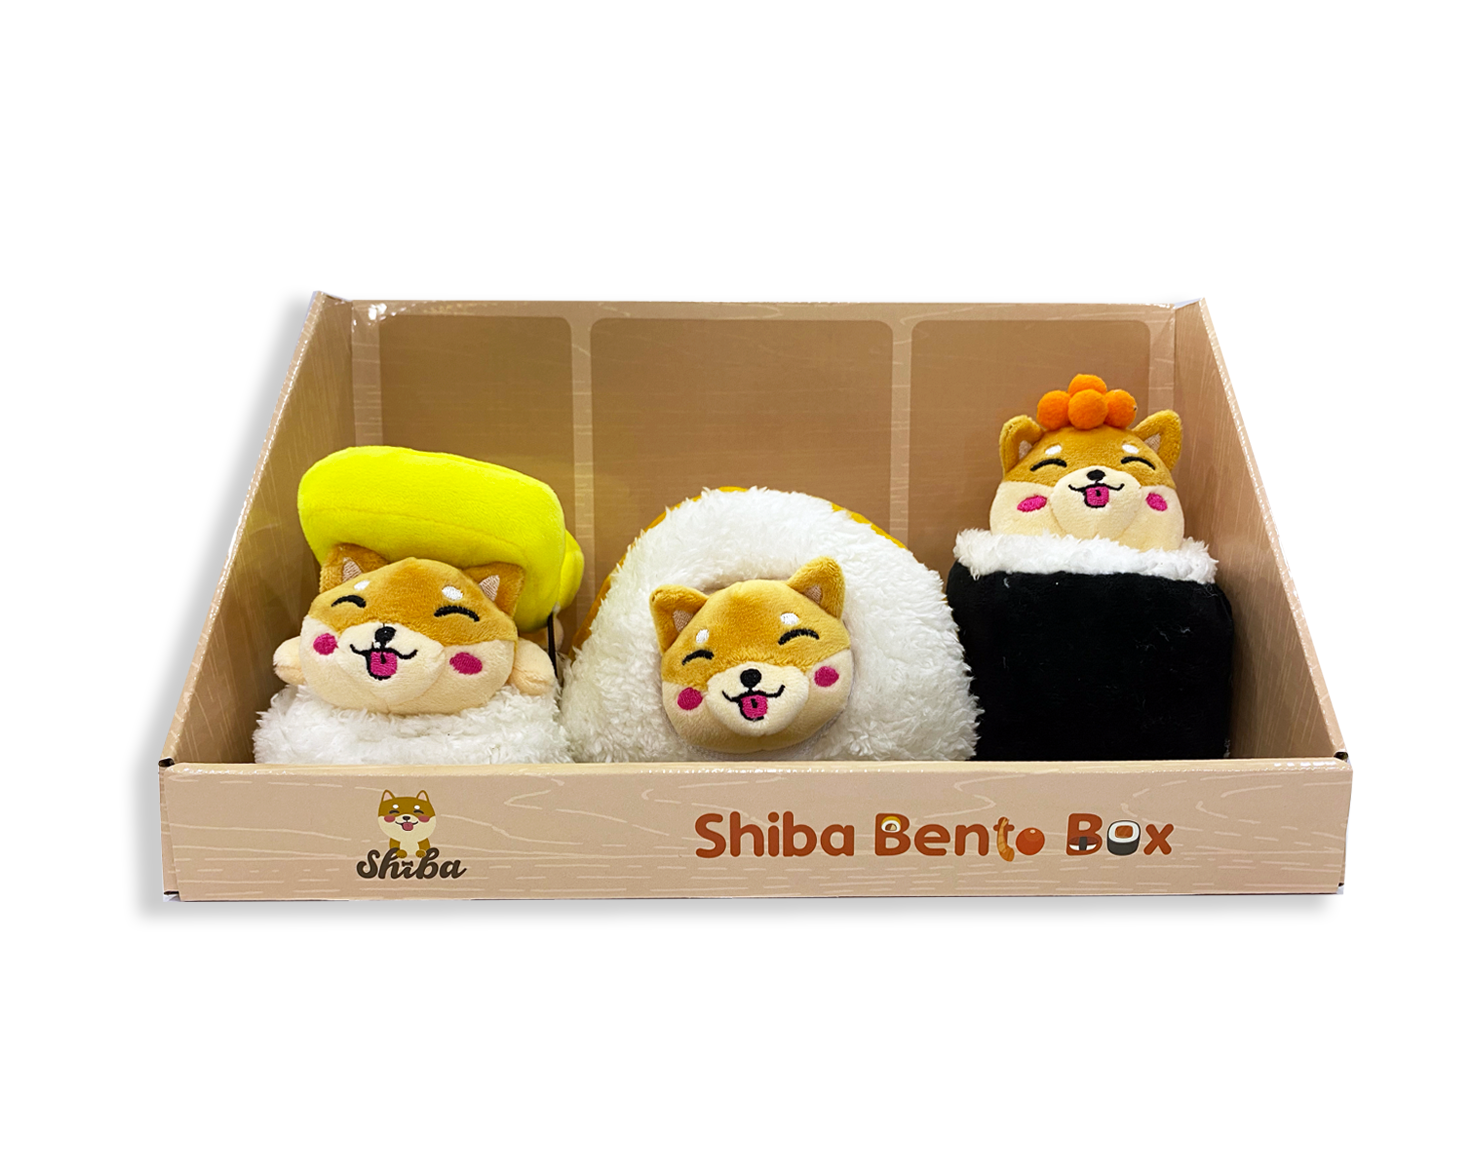 Shiba Bento Box Dog Toy